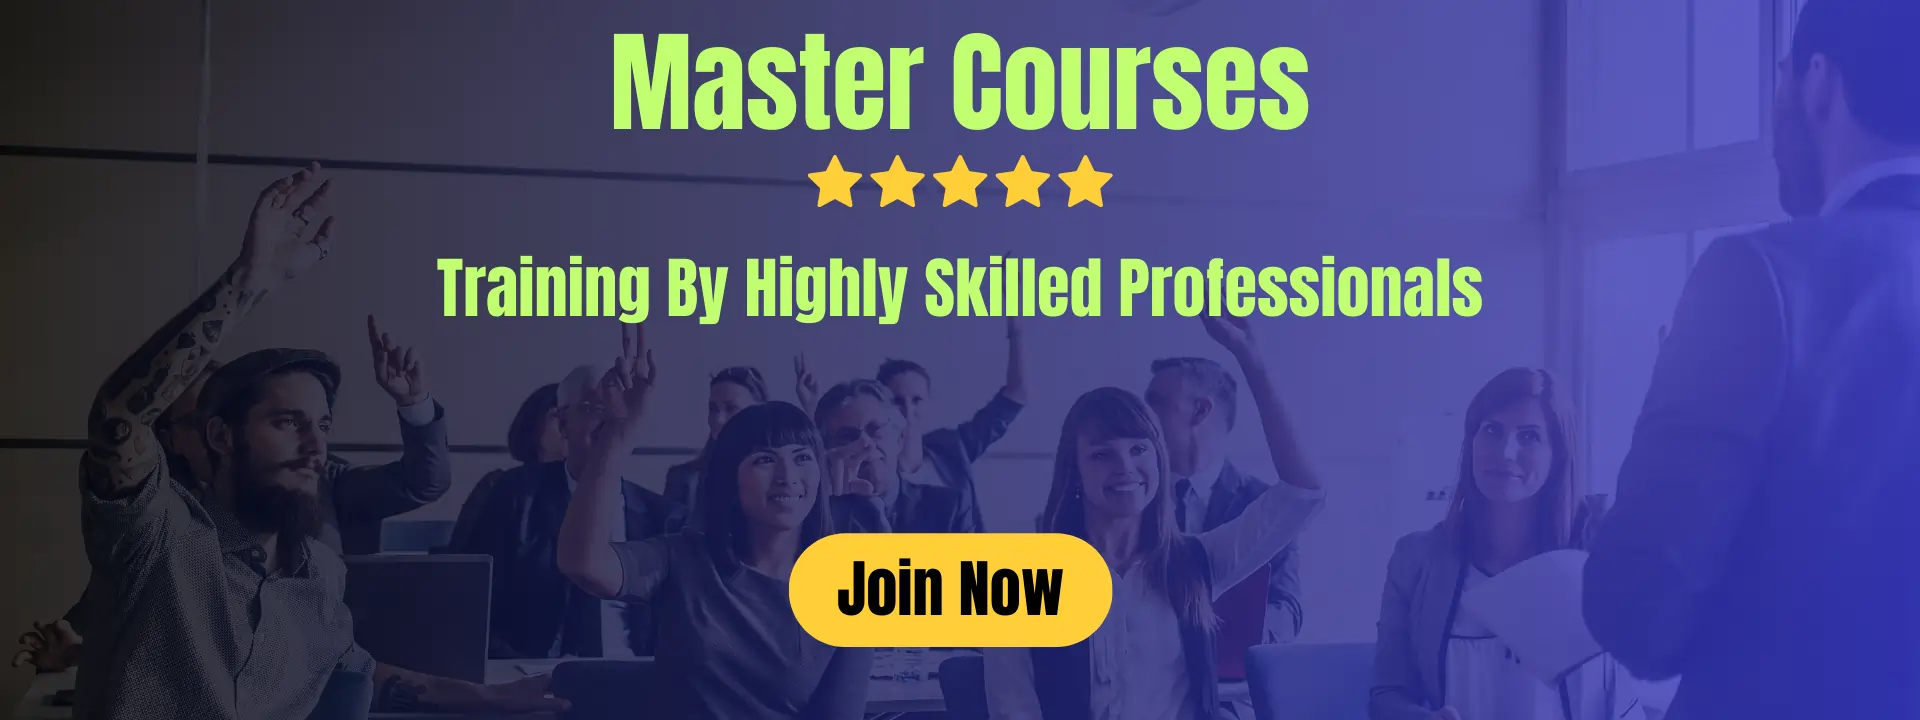 Master Courses.webp